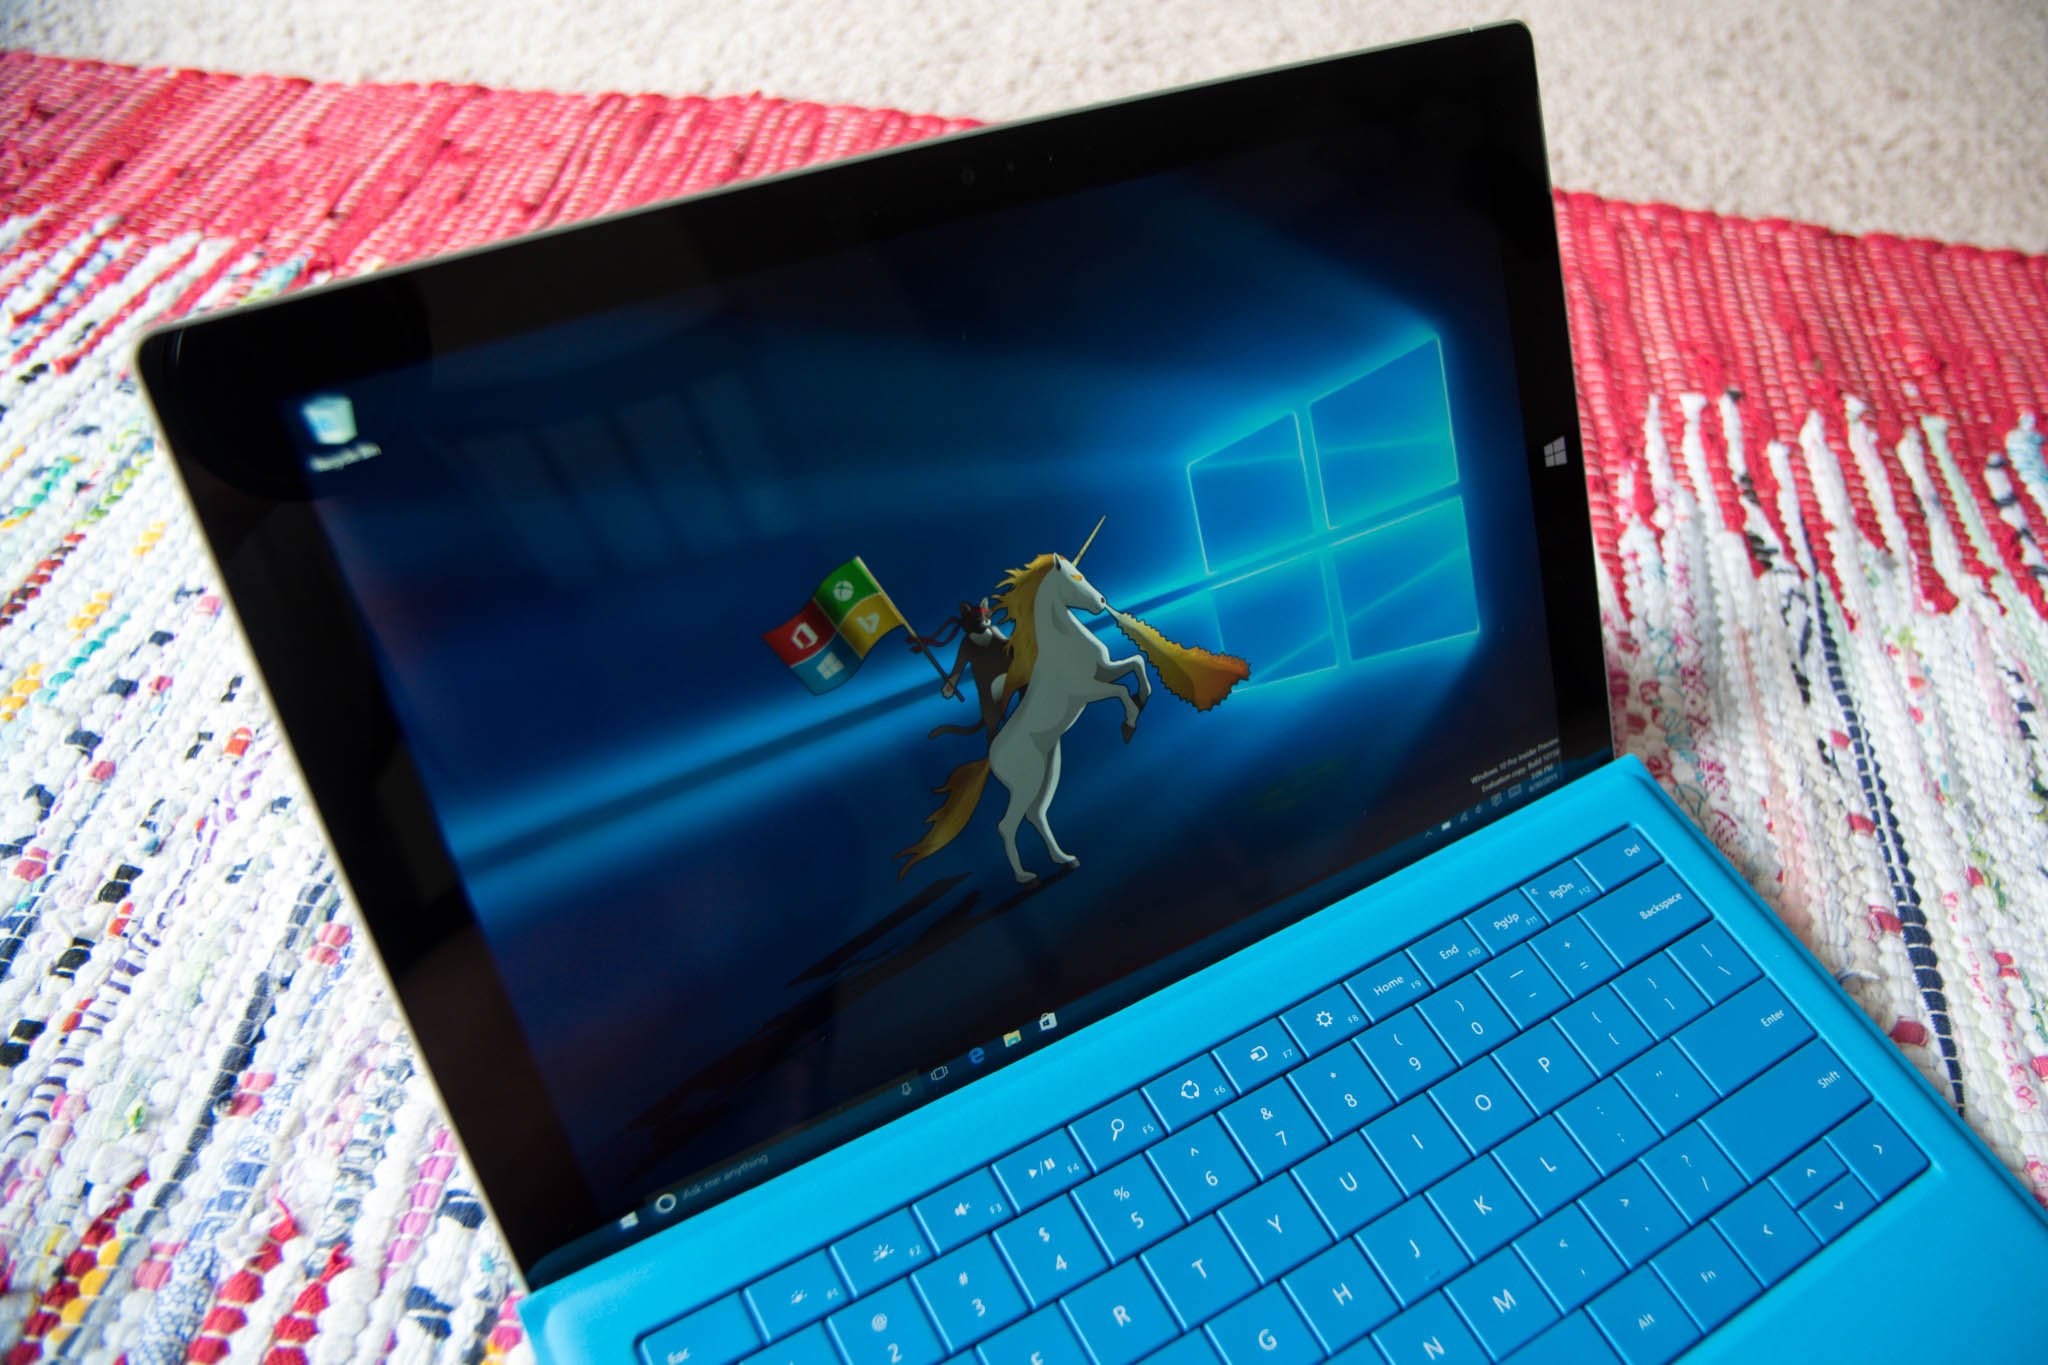 Windows 10 hero wallpaper combined with Ninja Cat on a Unicorn